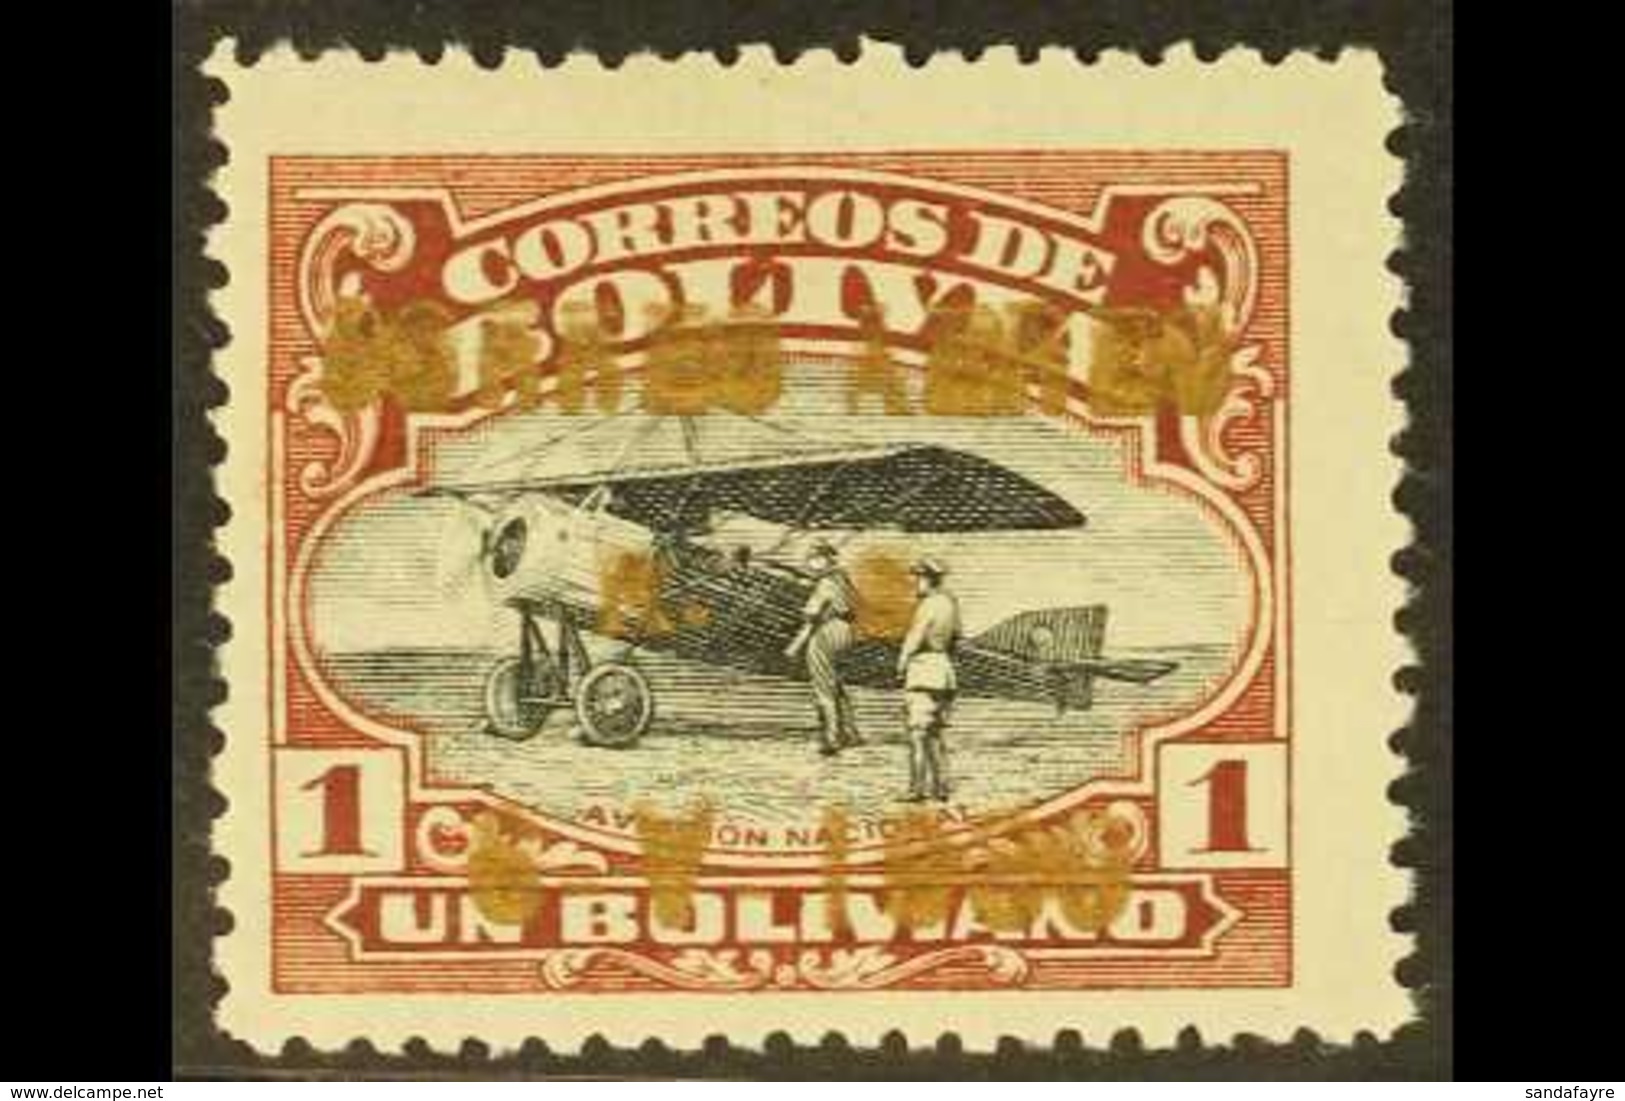 1930  1b Red-brown & Black Air "CORREO AEREO" Overprint In BRONZE (METALLIC) INK (Scott C23, SG 240), Fine Mint, Very Fr - Bolivien